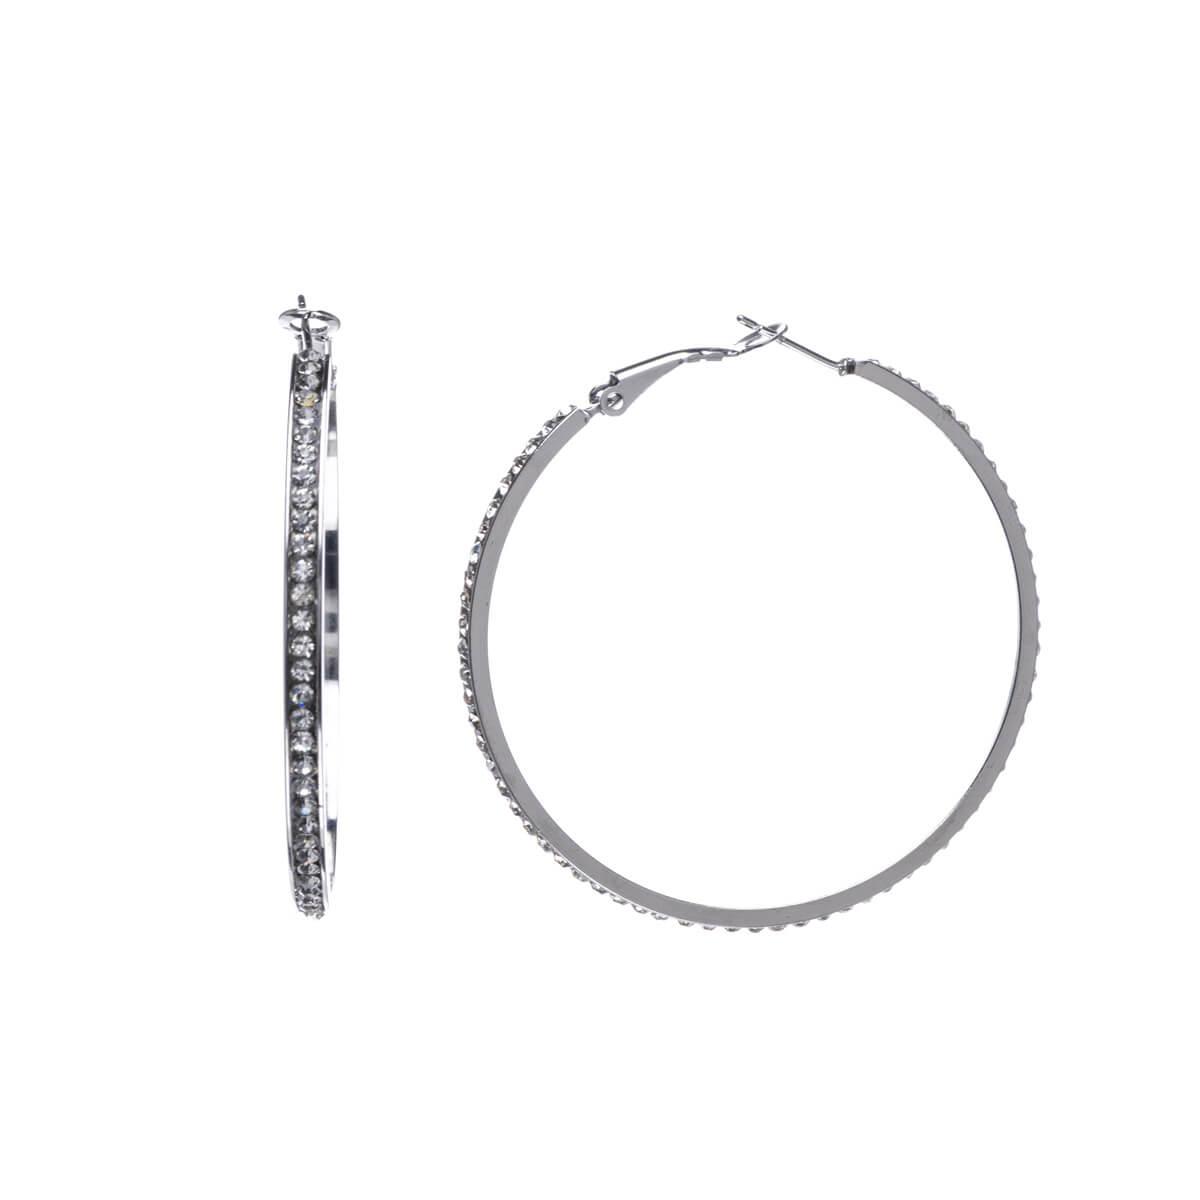 Rhinestone earrings ring earrings 6cm (steel 316L)